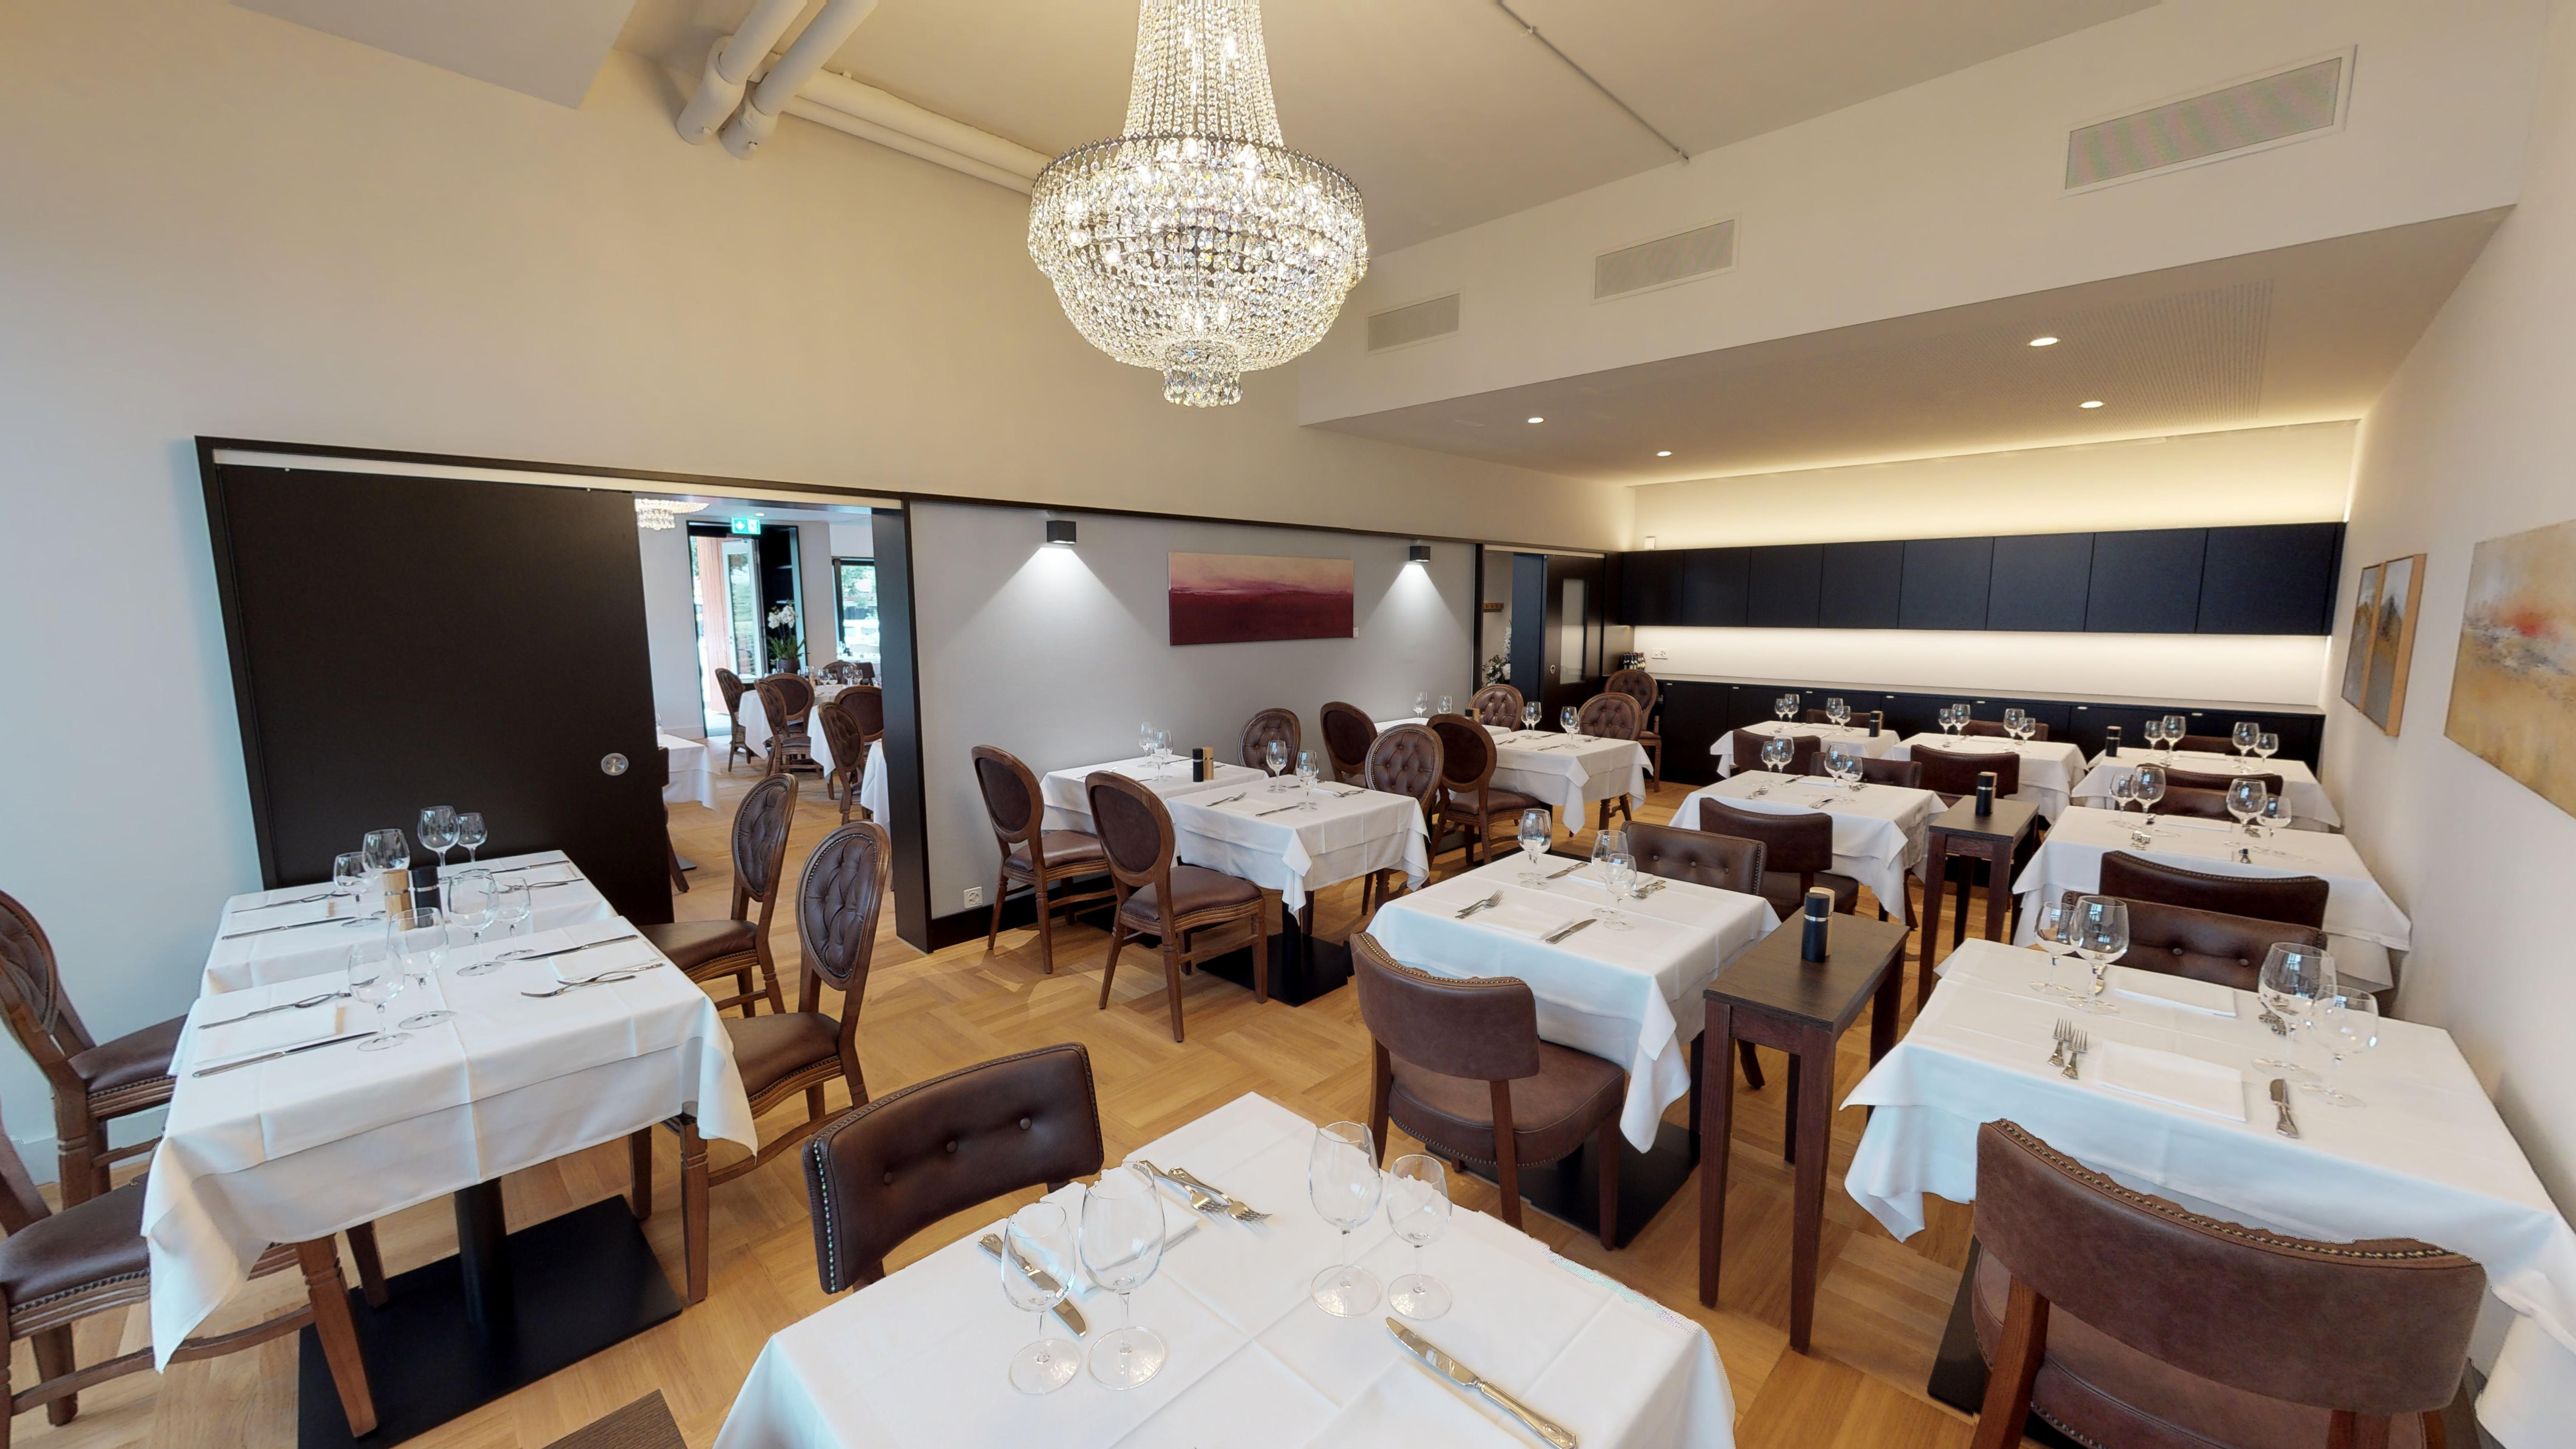 Bilder Restaurant,Pinseria,Steakhouse Friedbrunnen